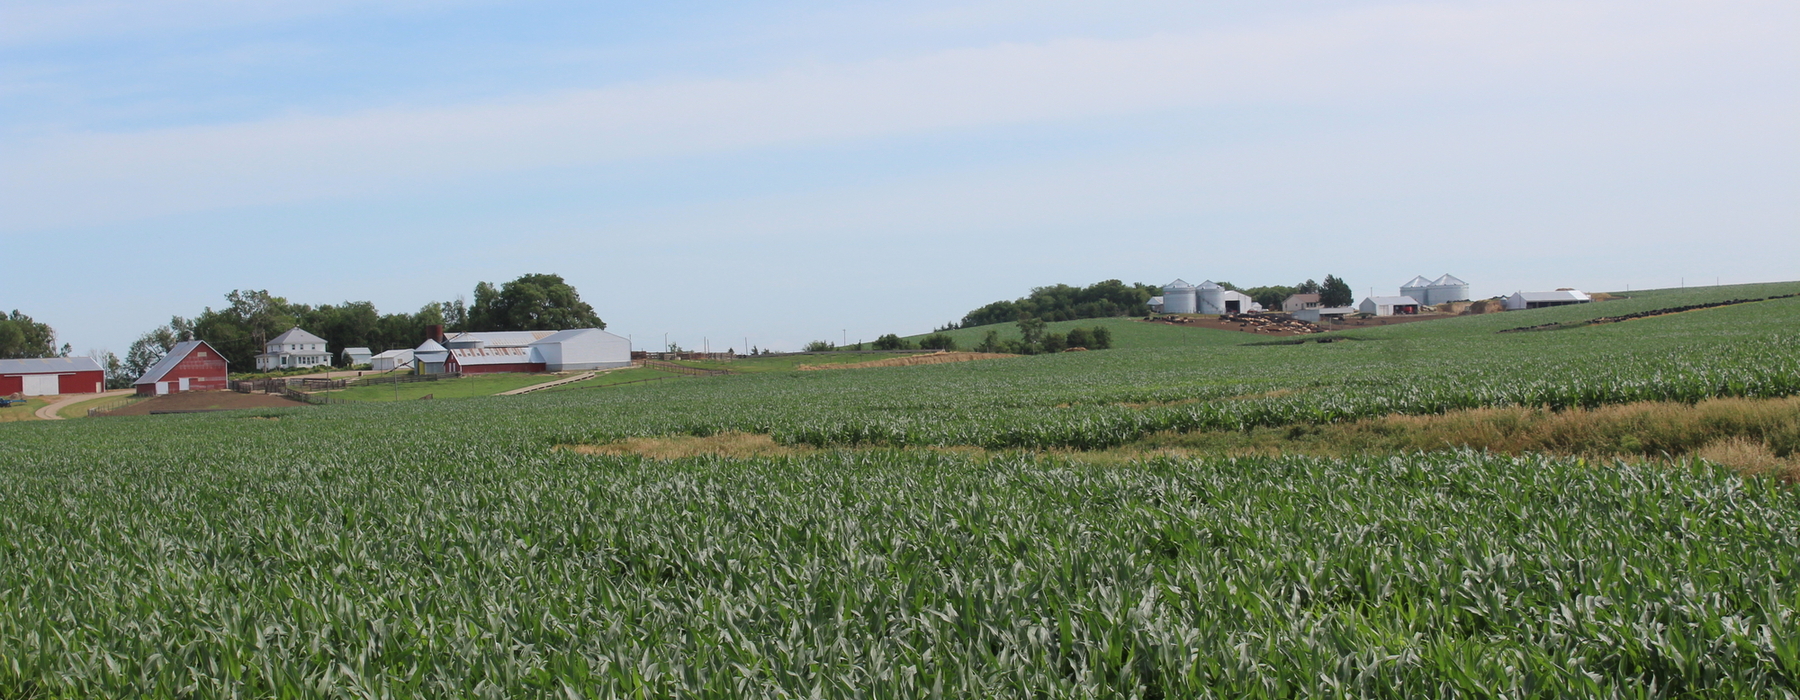 Corn field and farm house